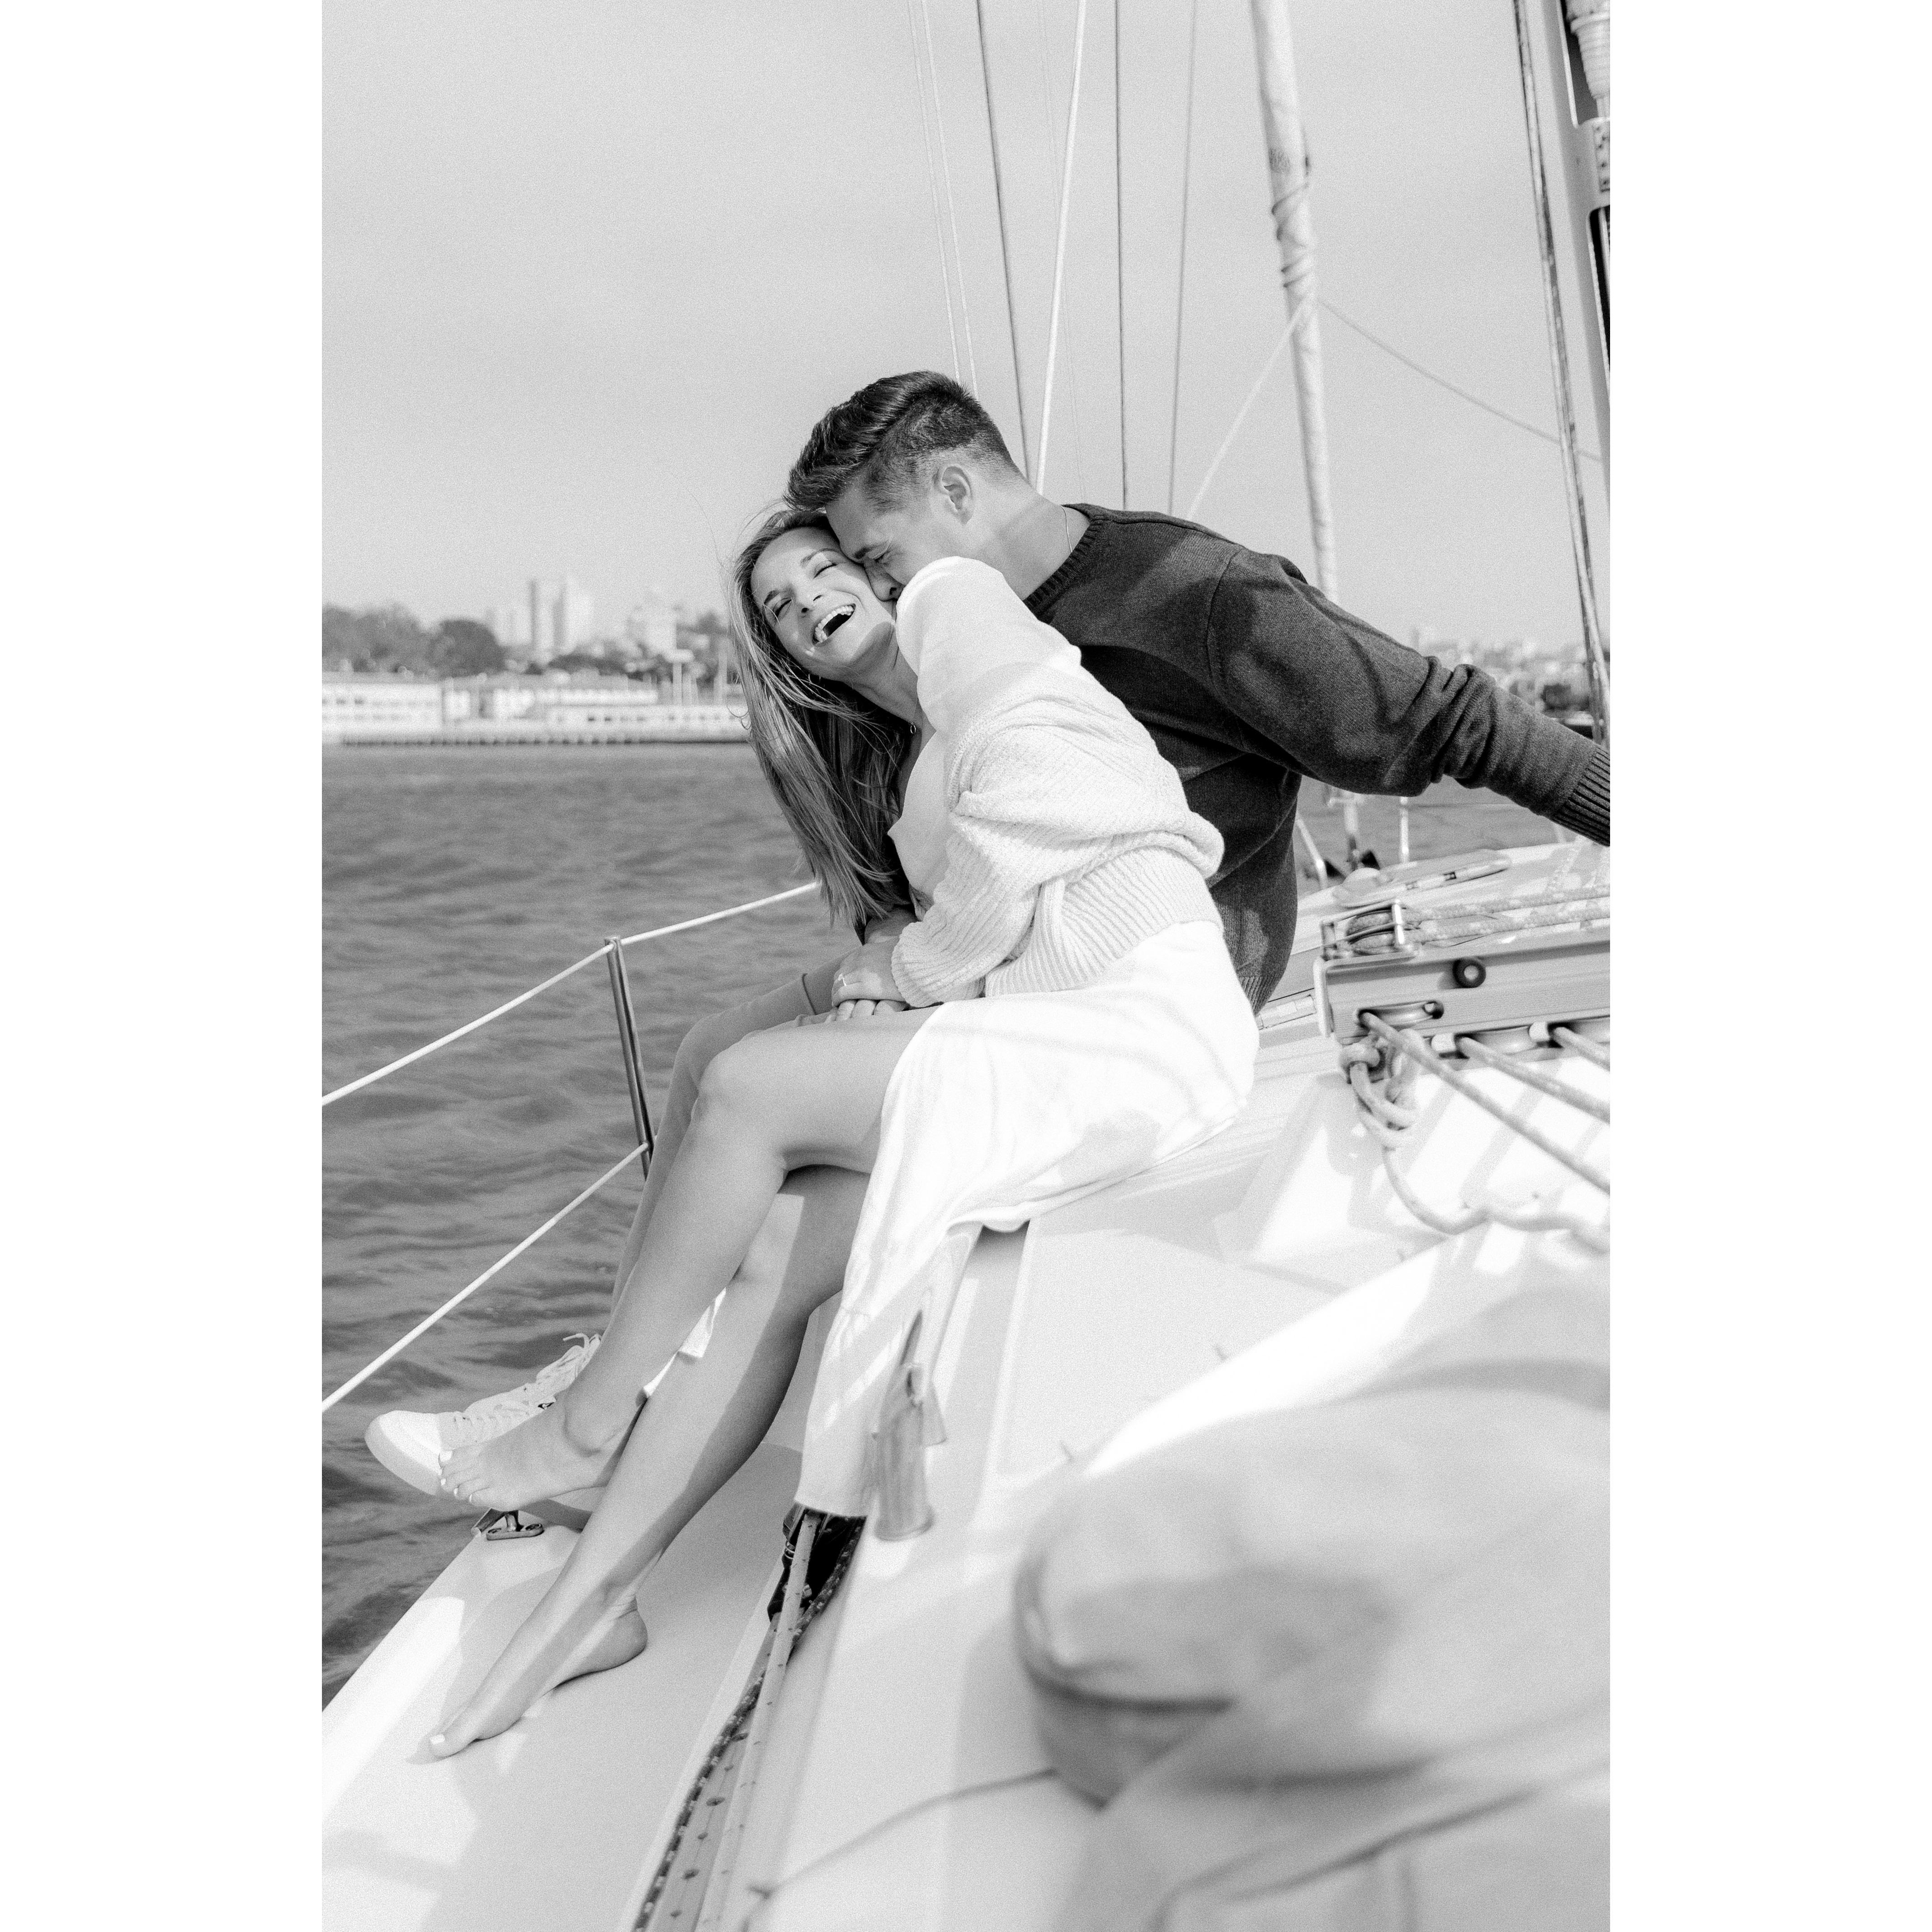 Engagement Photos - sailing the bay. (Taken: August 2021 / Photography: Mashaida)